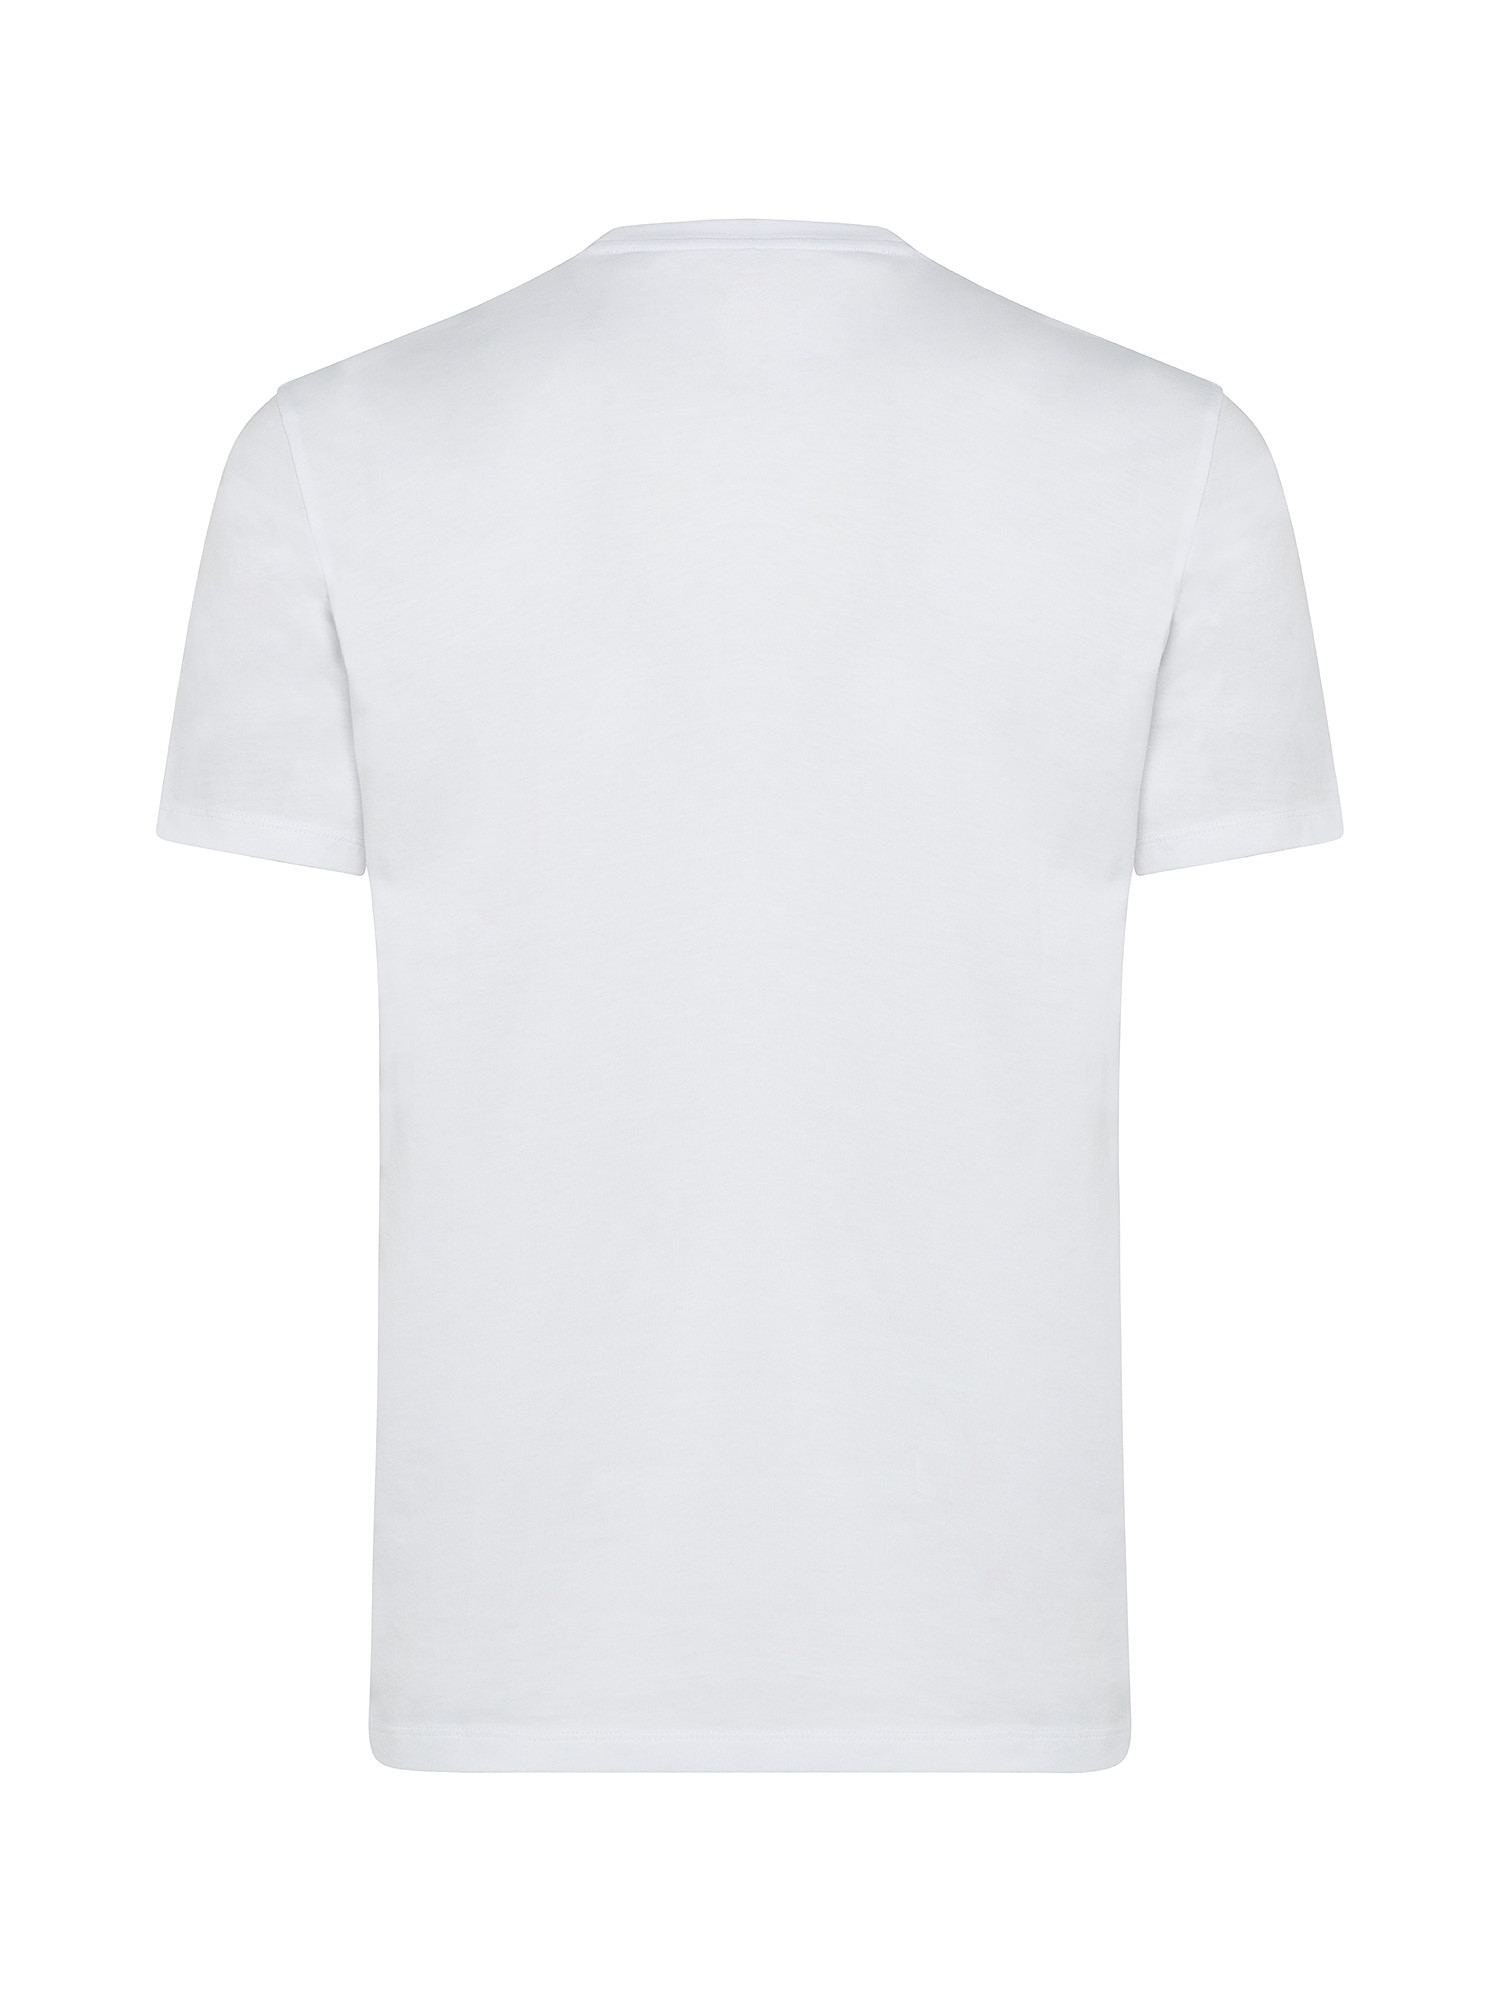 Armani Exchange - T-shirt regular fit in cotone con logo, Bianco, large image number 1